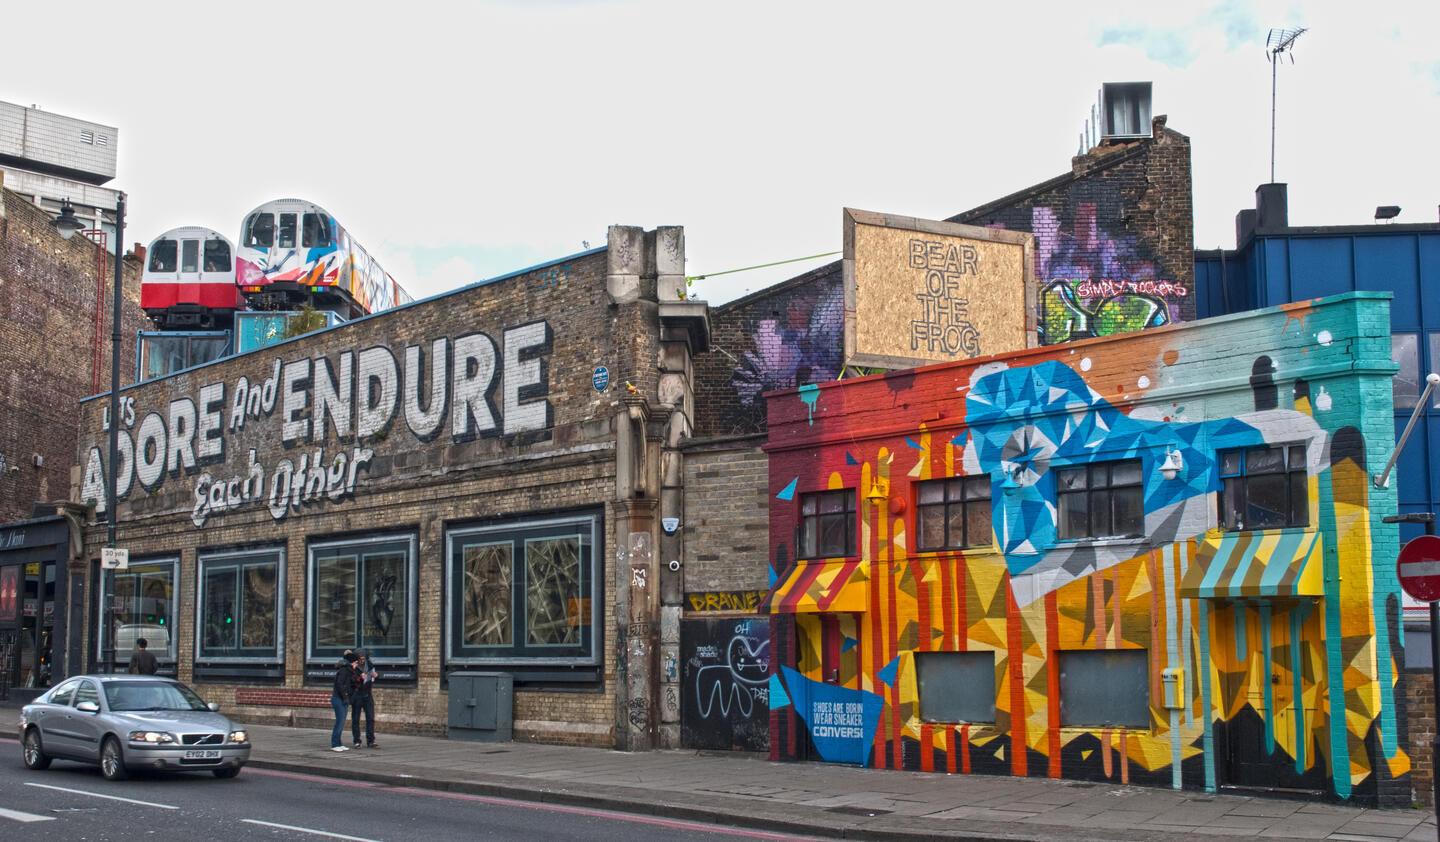 Student Accommodation in Shoreditch, London - street art and graffiti in Shoreditch